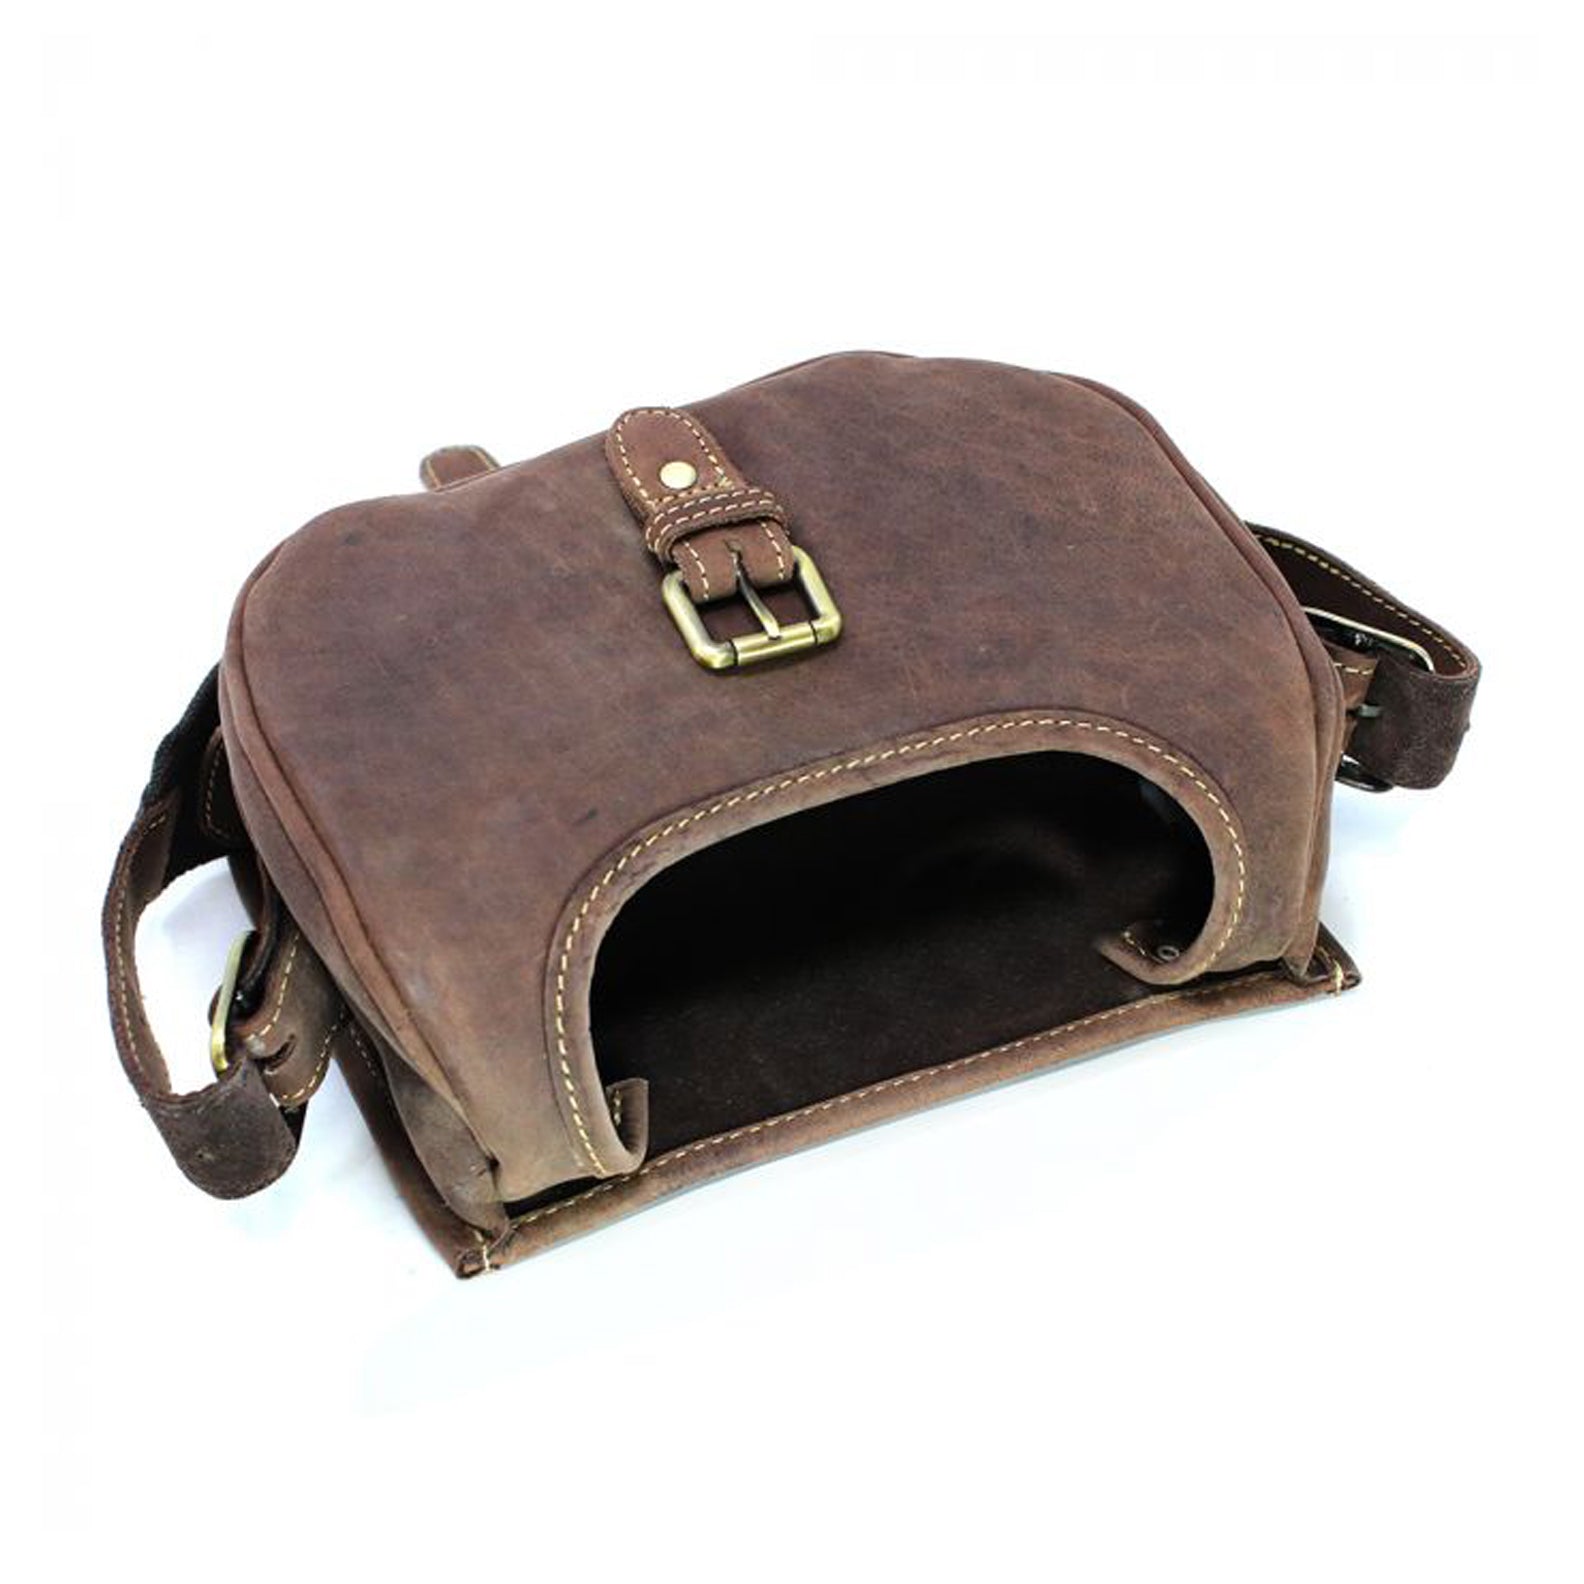 British Bag Co. Berkeley Leather Cartridge Bag